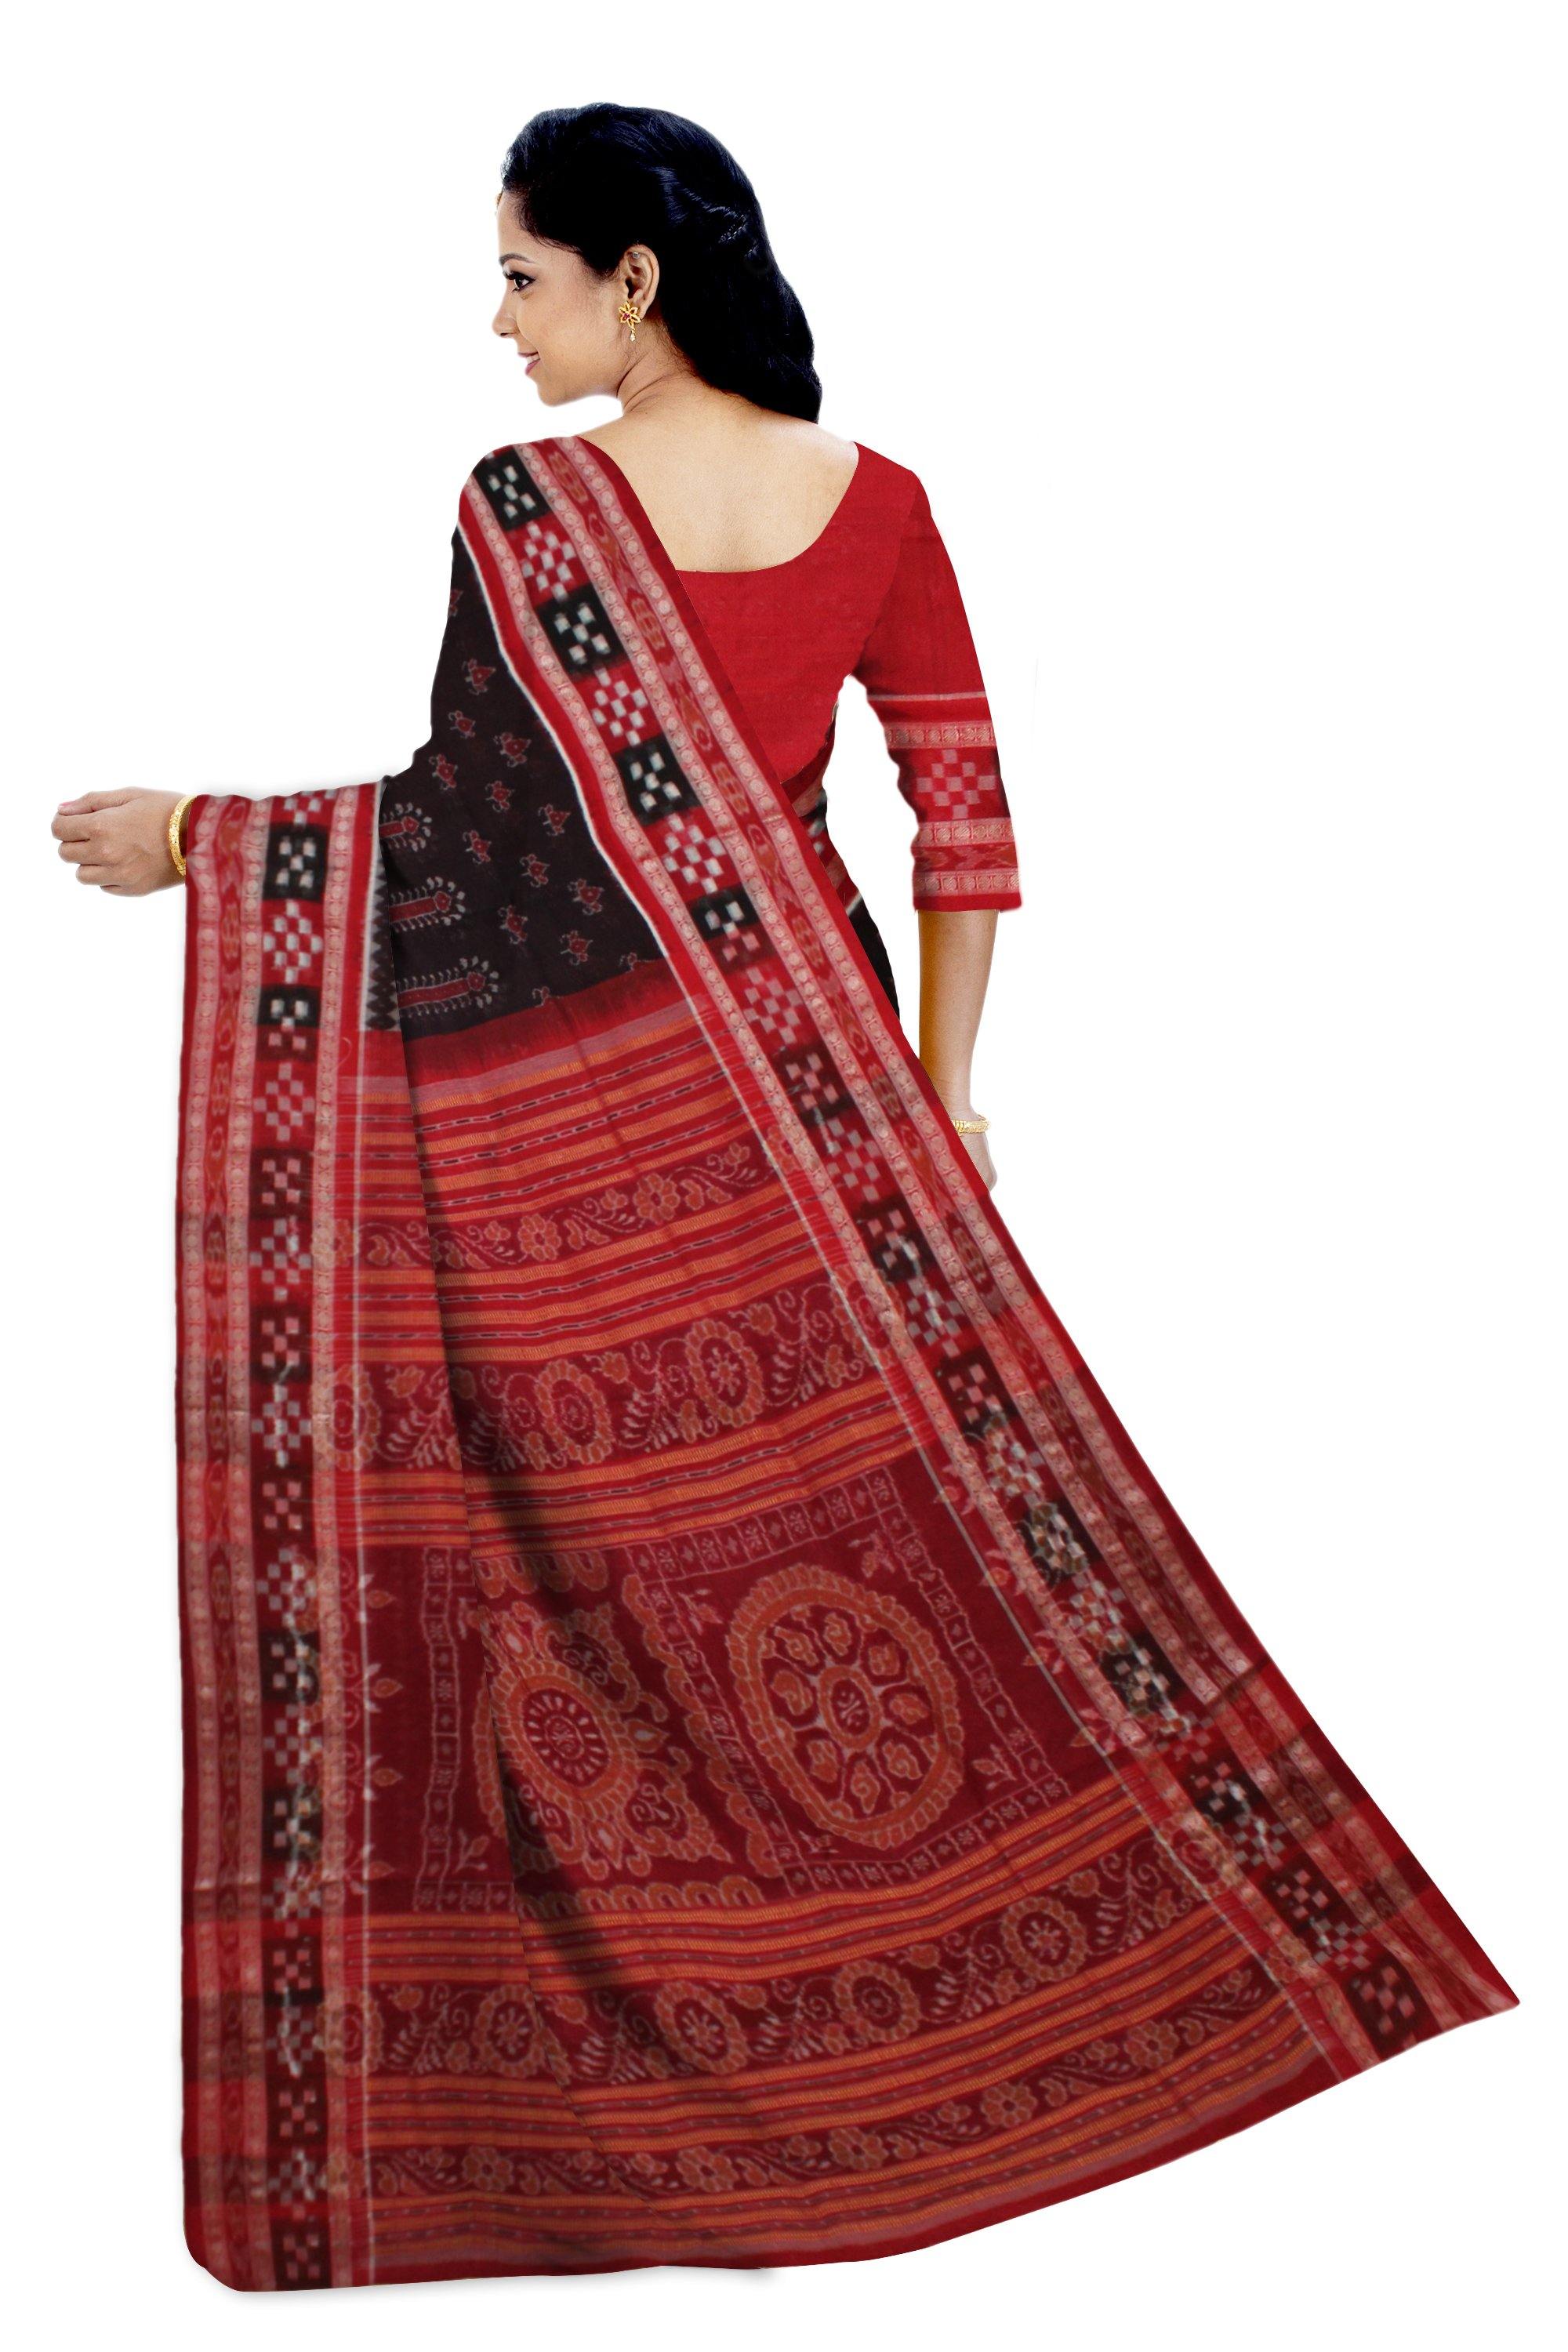 Exclusive Sambalpuri IKAT cotton Saree with sapta border in Brown color with Blouse piece - Koshali Arts & Crafts Enterprise